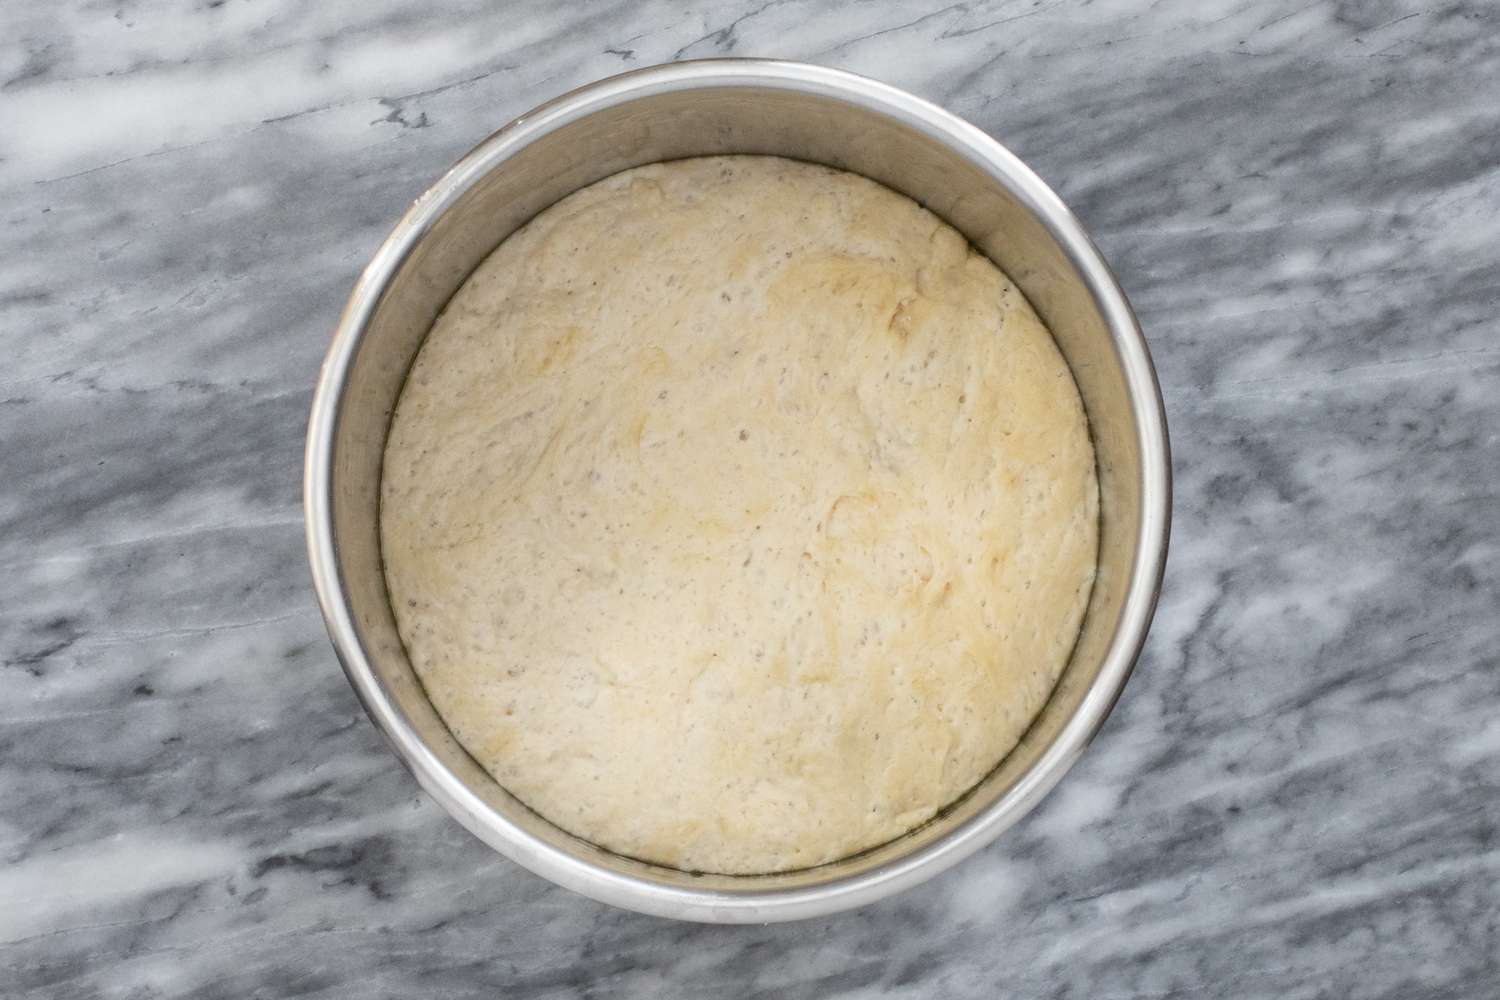 Bread dough in the Instant Pot